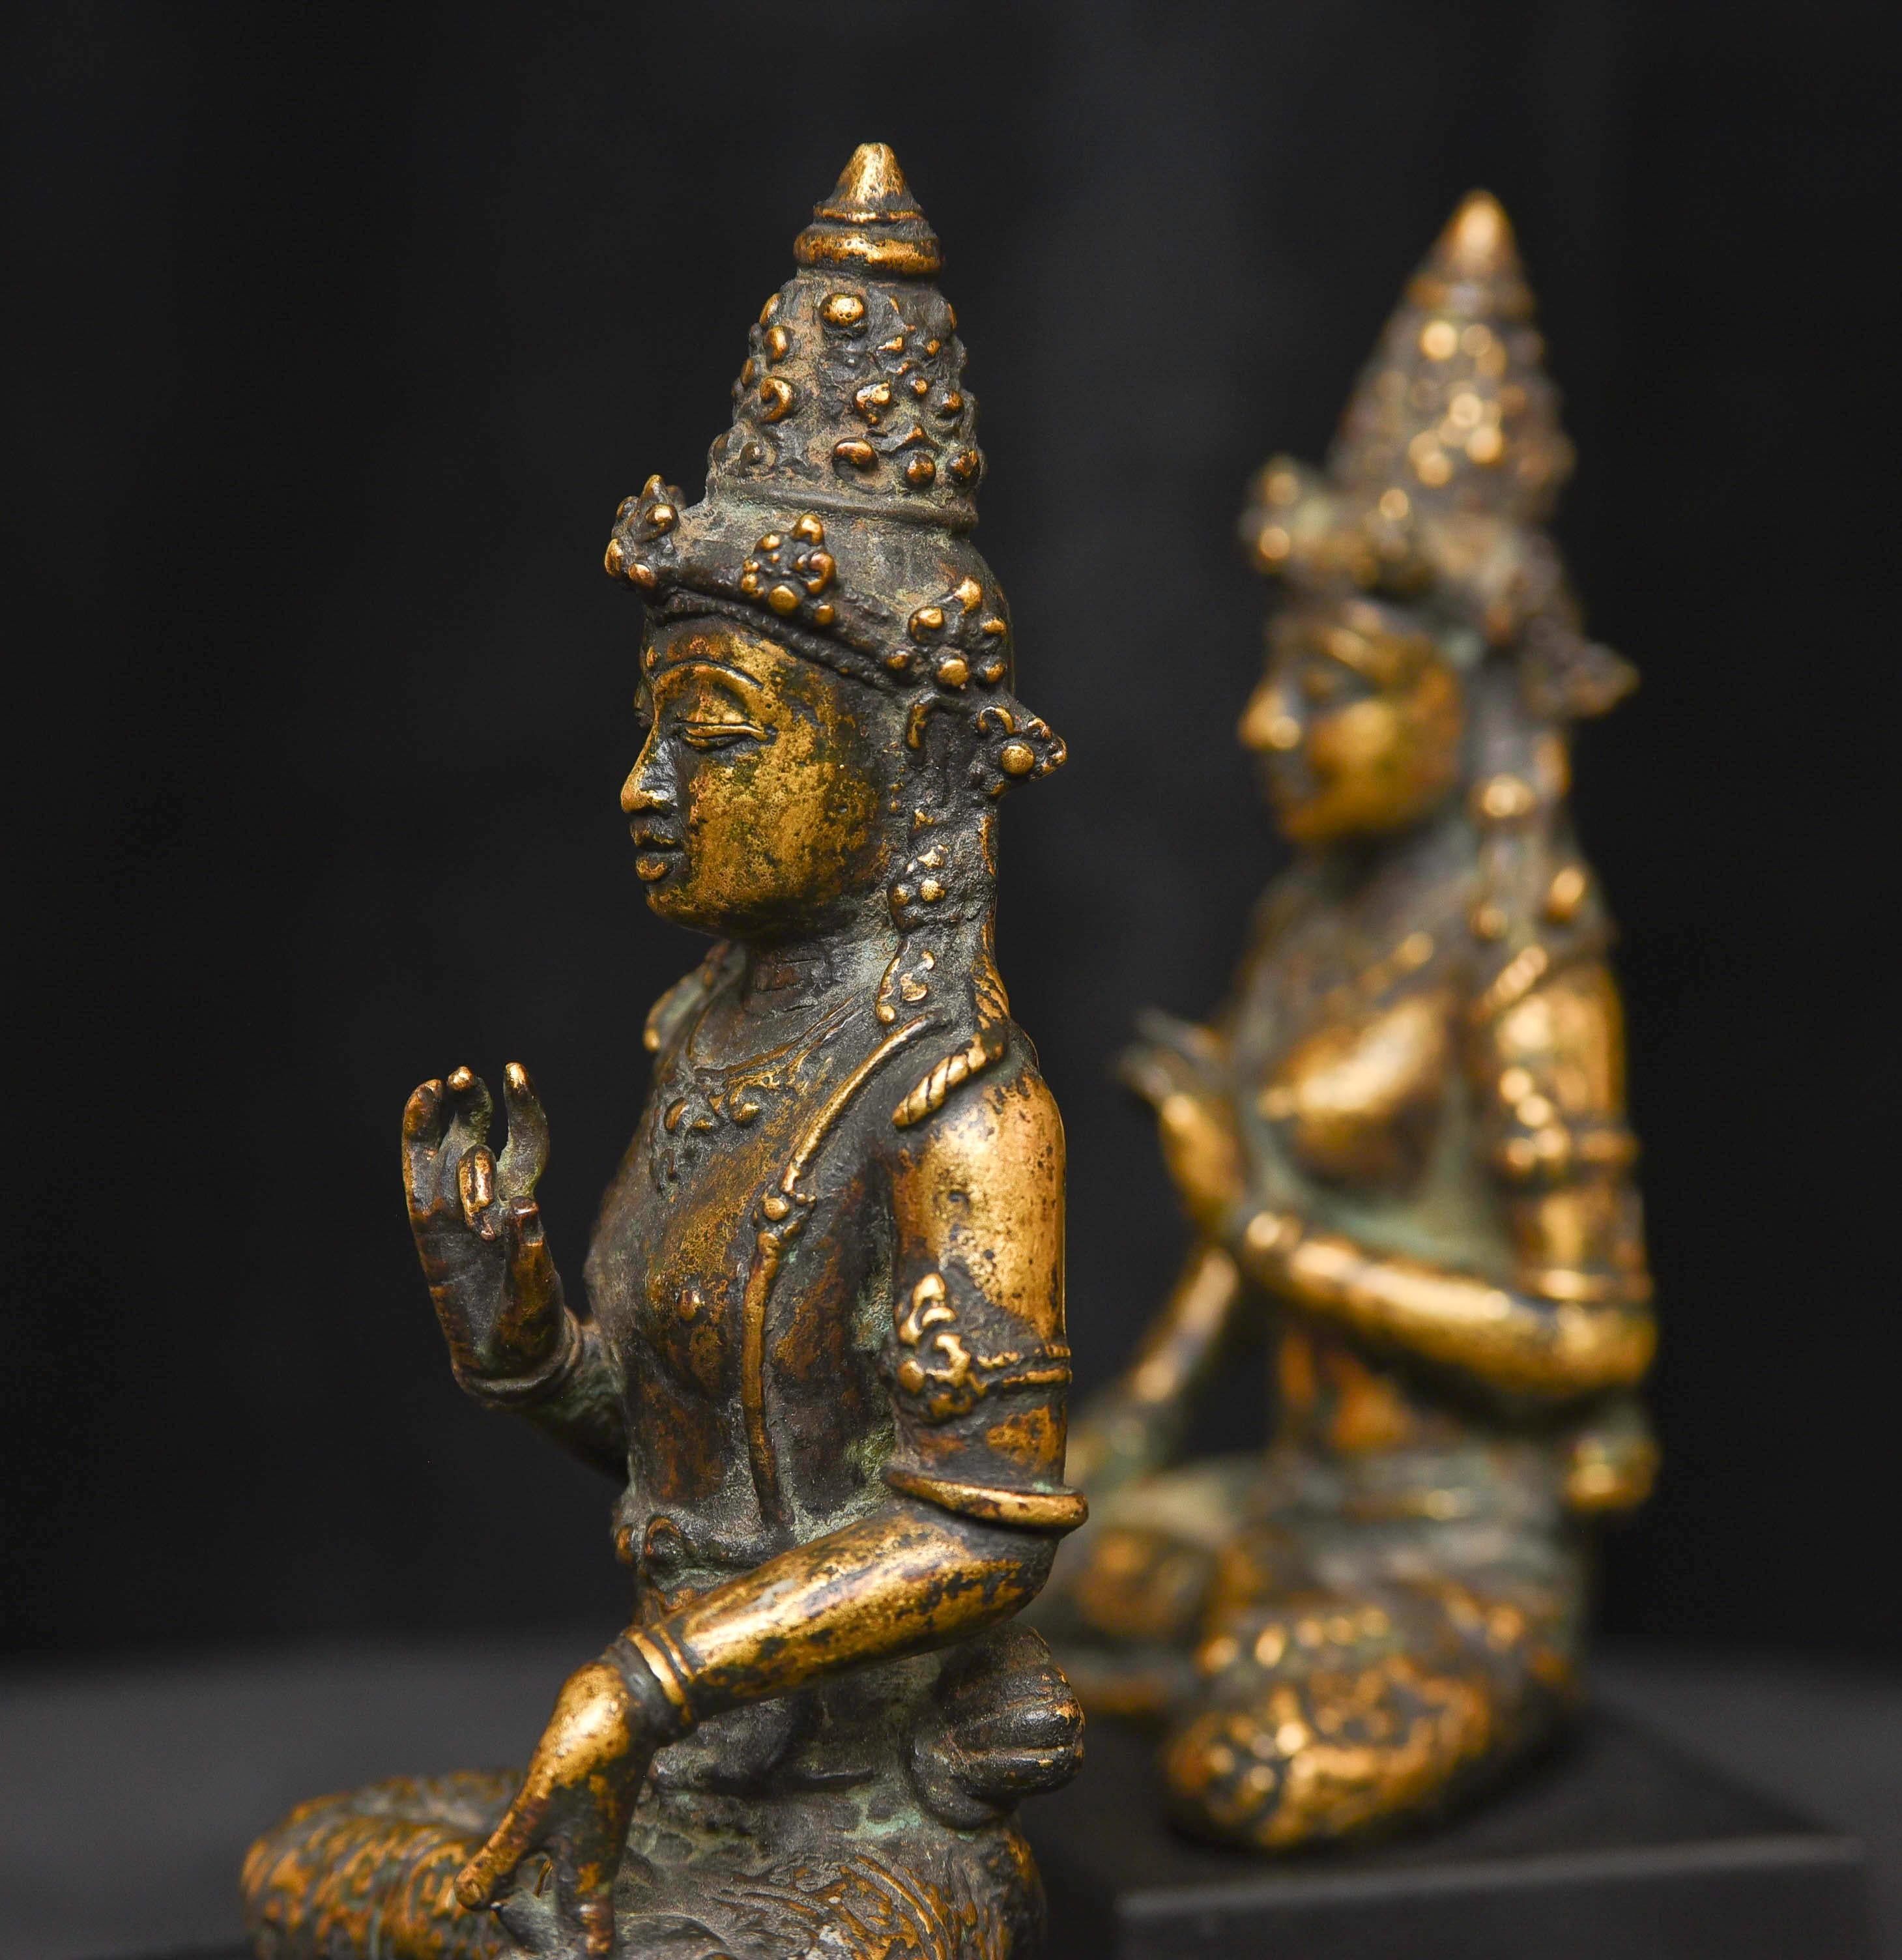 15-19thC Indonesian or Javanese Gilt Bronze Deities - 9591 For Sale 8